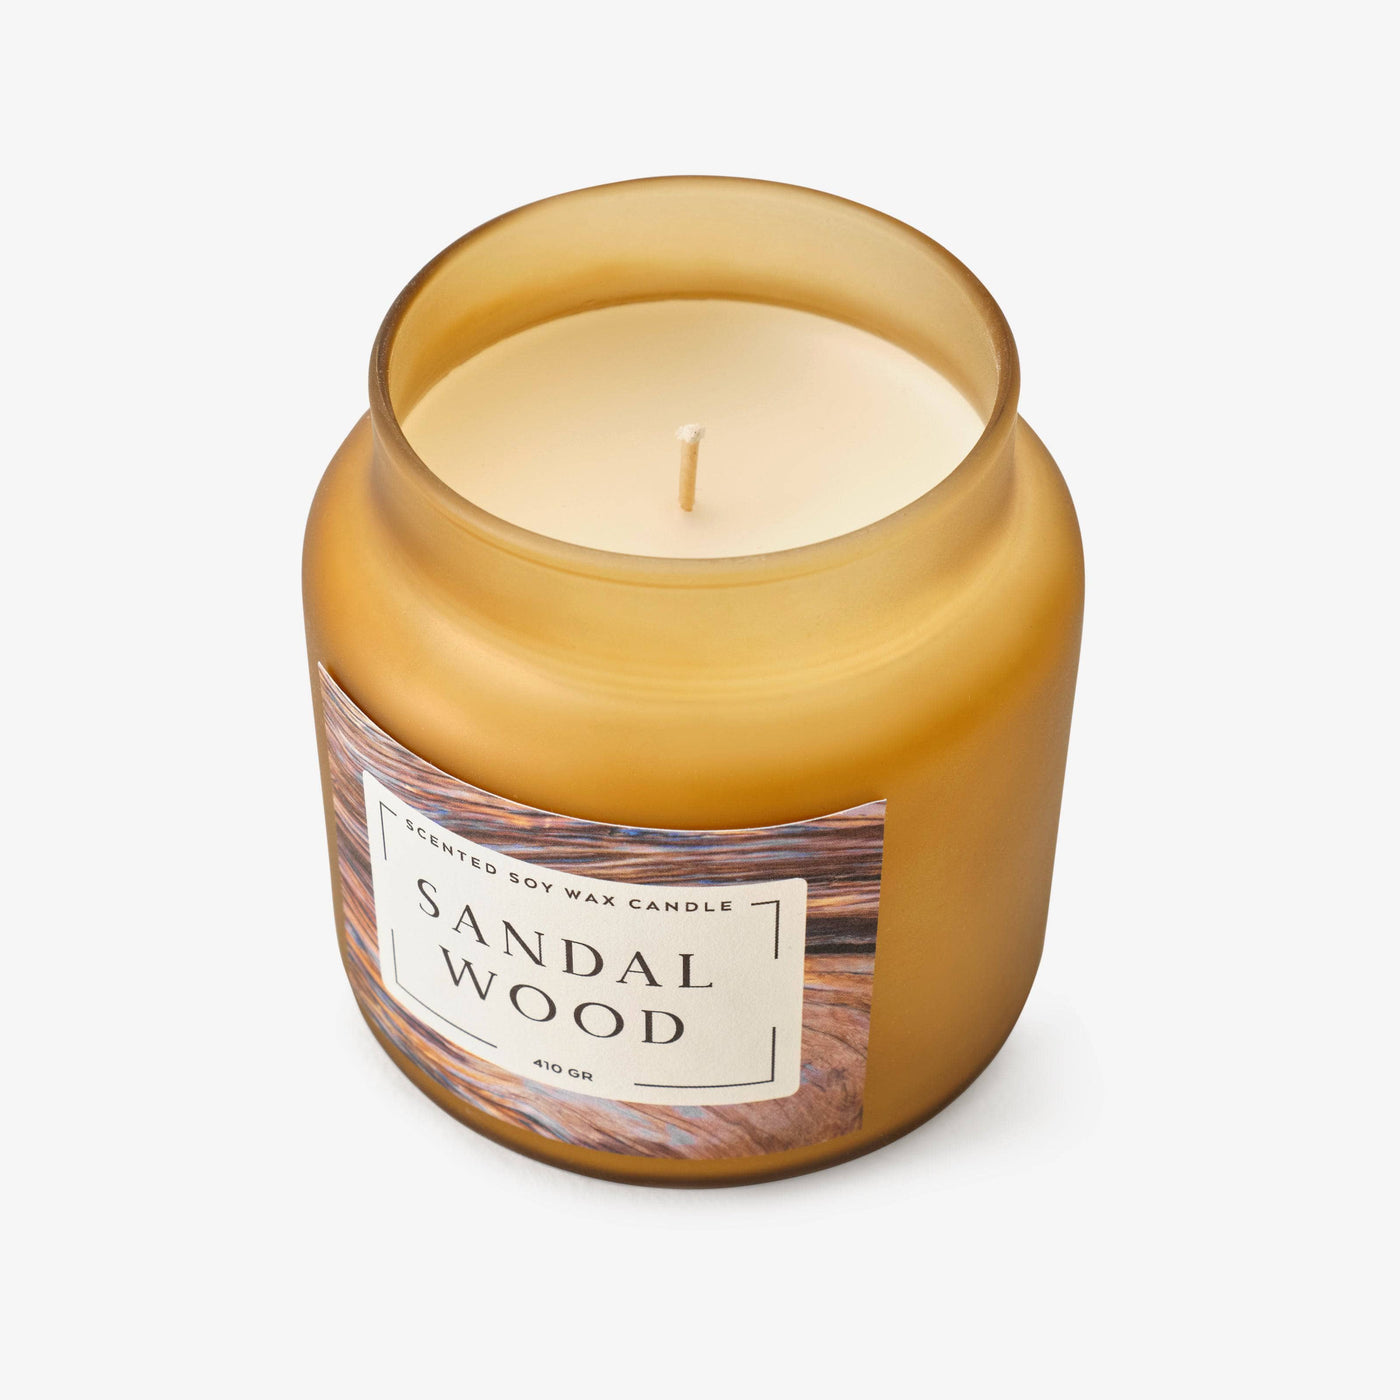 Sandalwood Candle, Mustard, 410 g 4